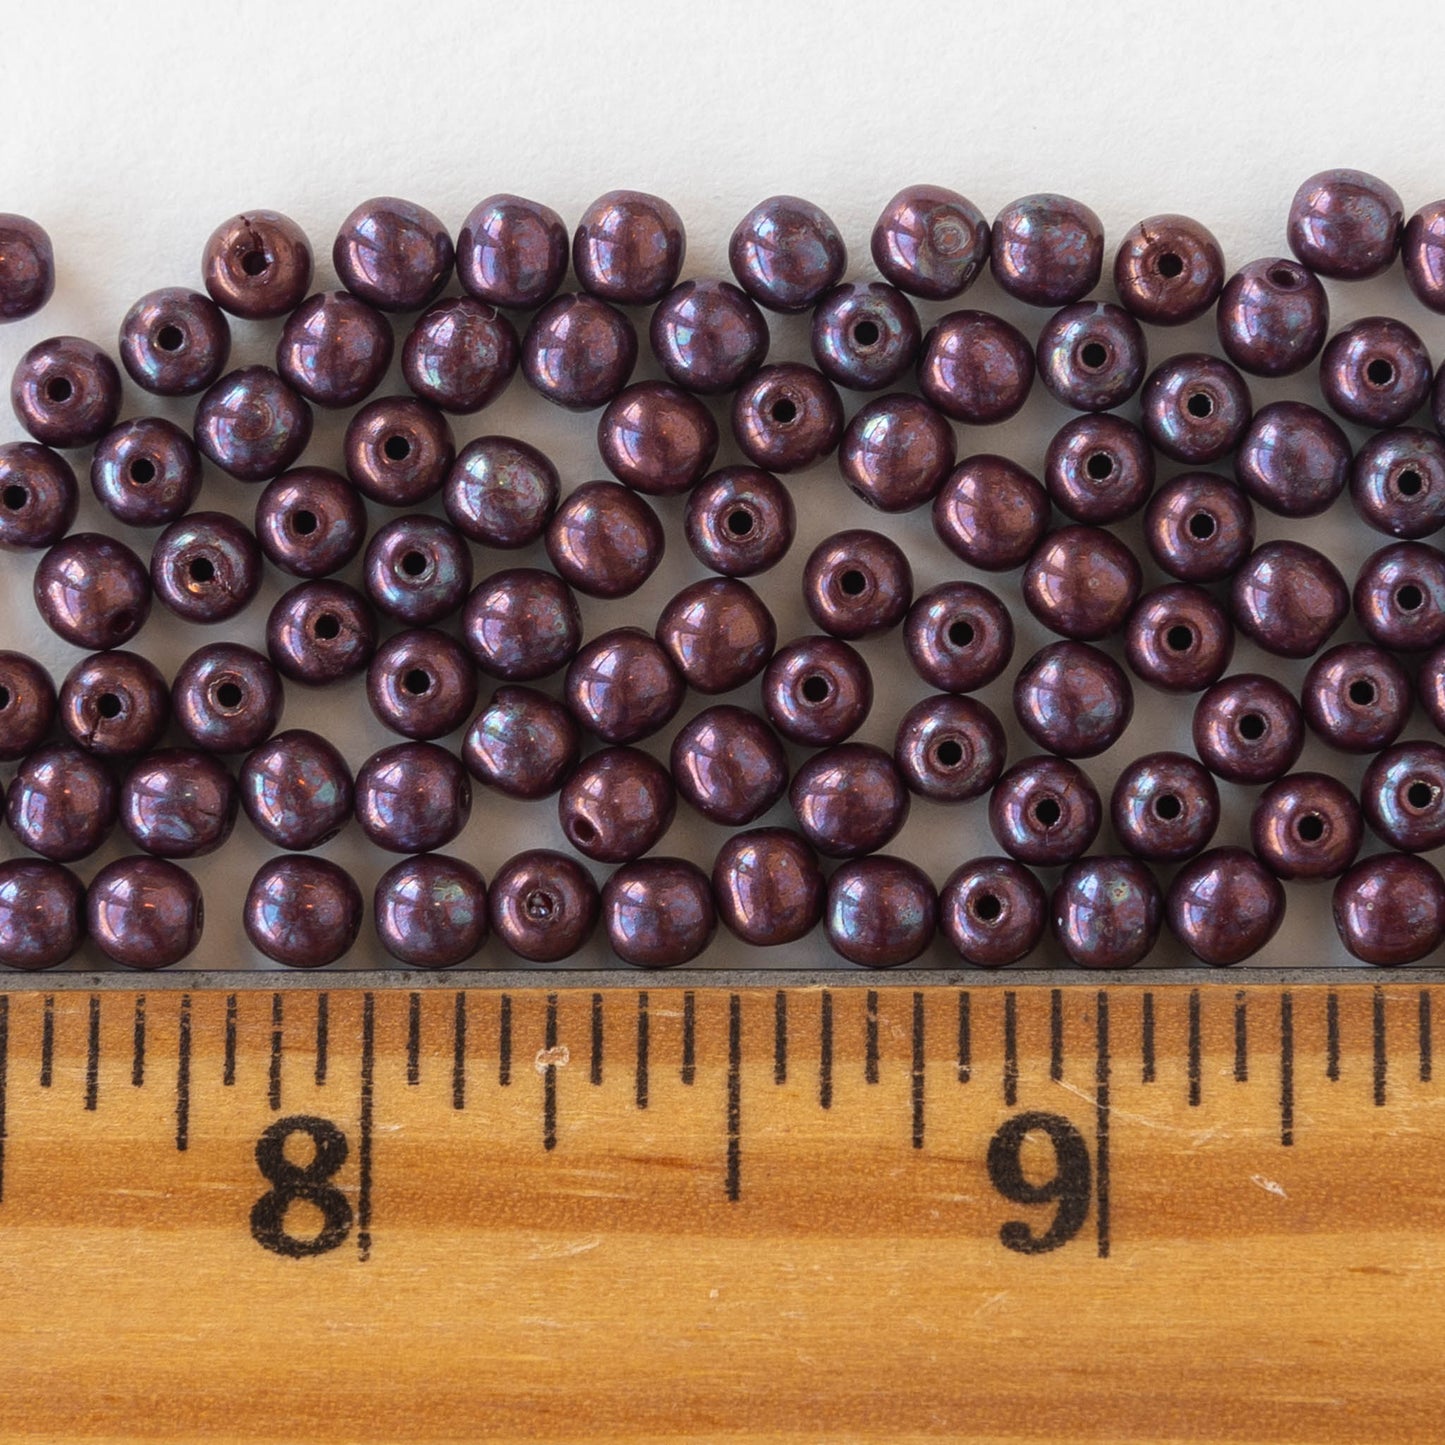 4mm Round Glass Beads - Metallic Mix of Purple and Pink - 100 Beads